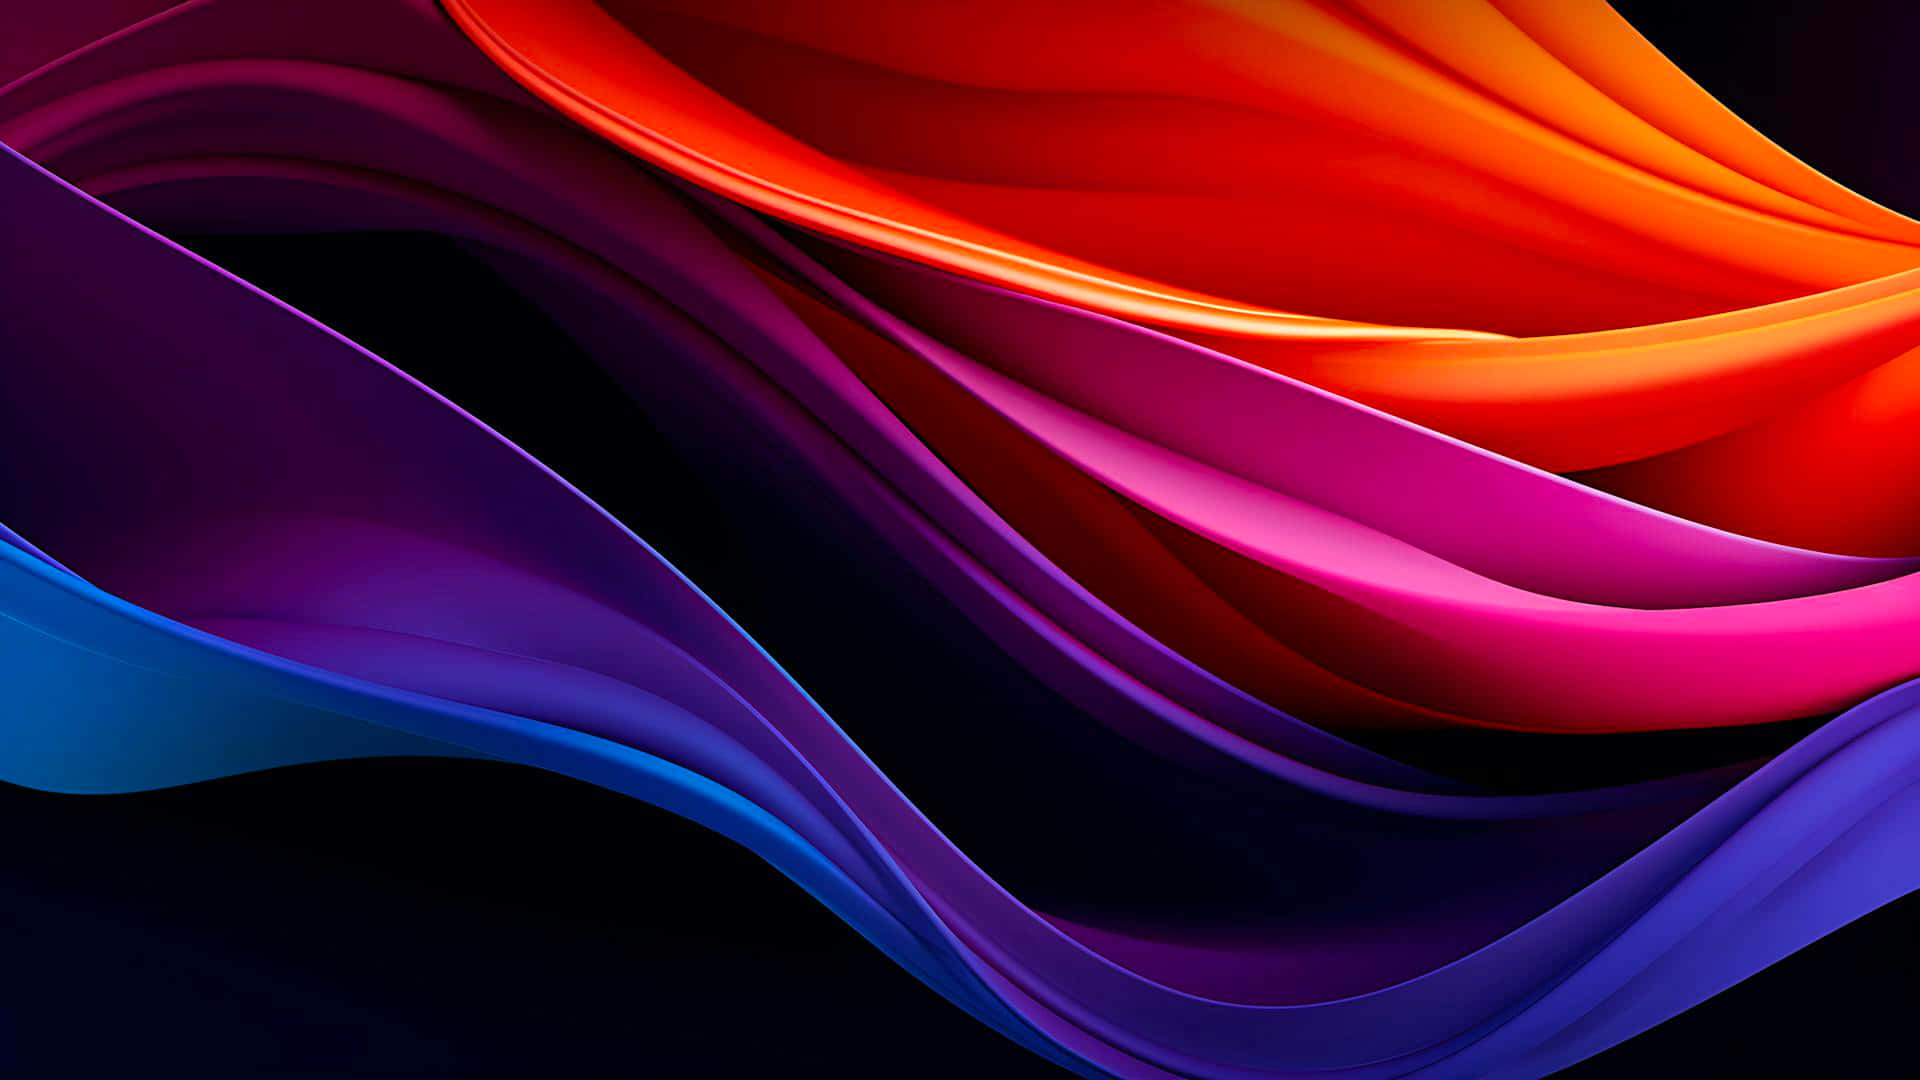 Vibrant Abstract Gradient Waves.jpg Wallpaper